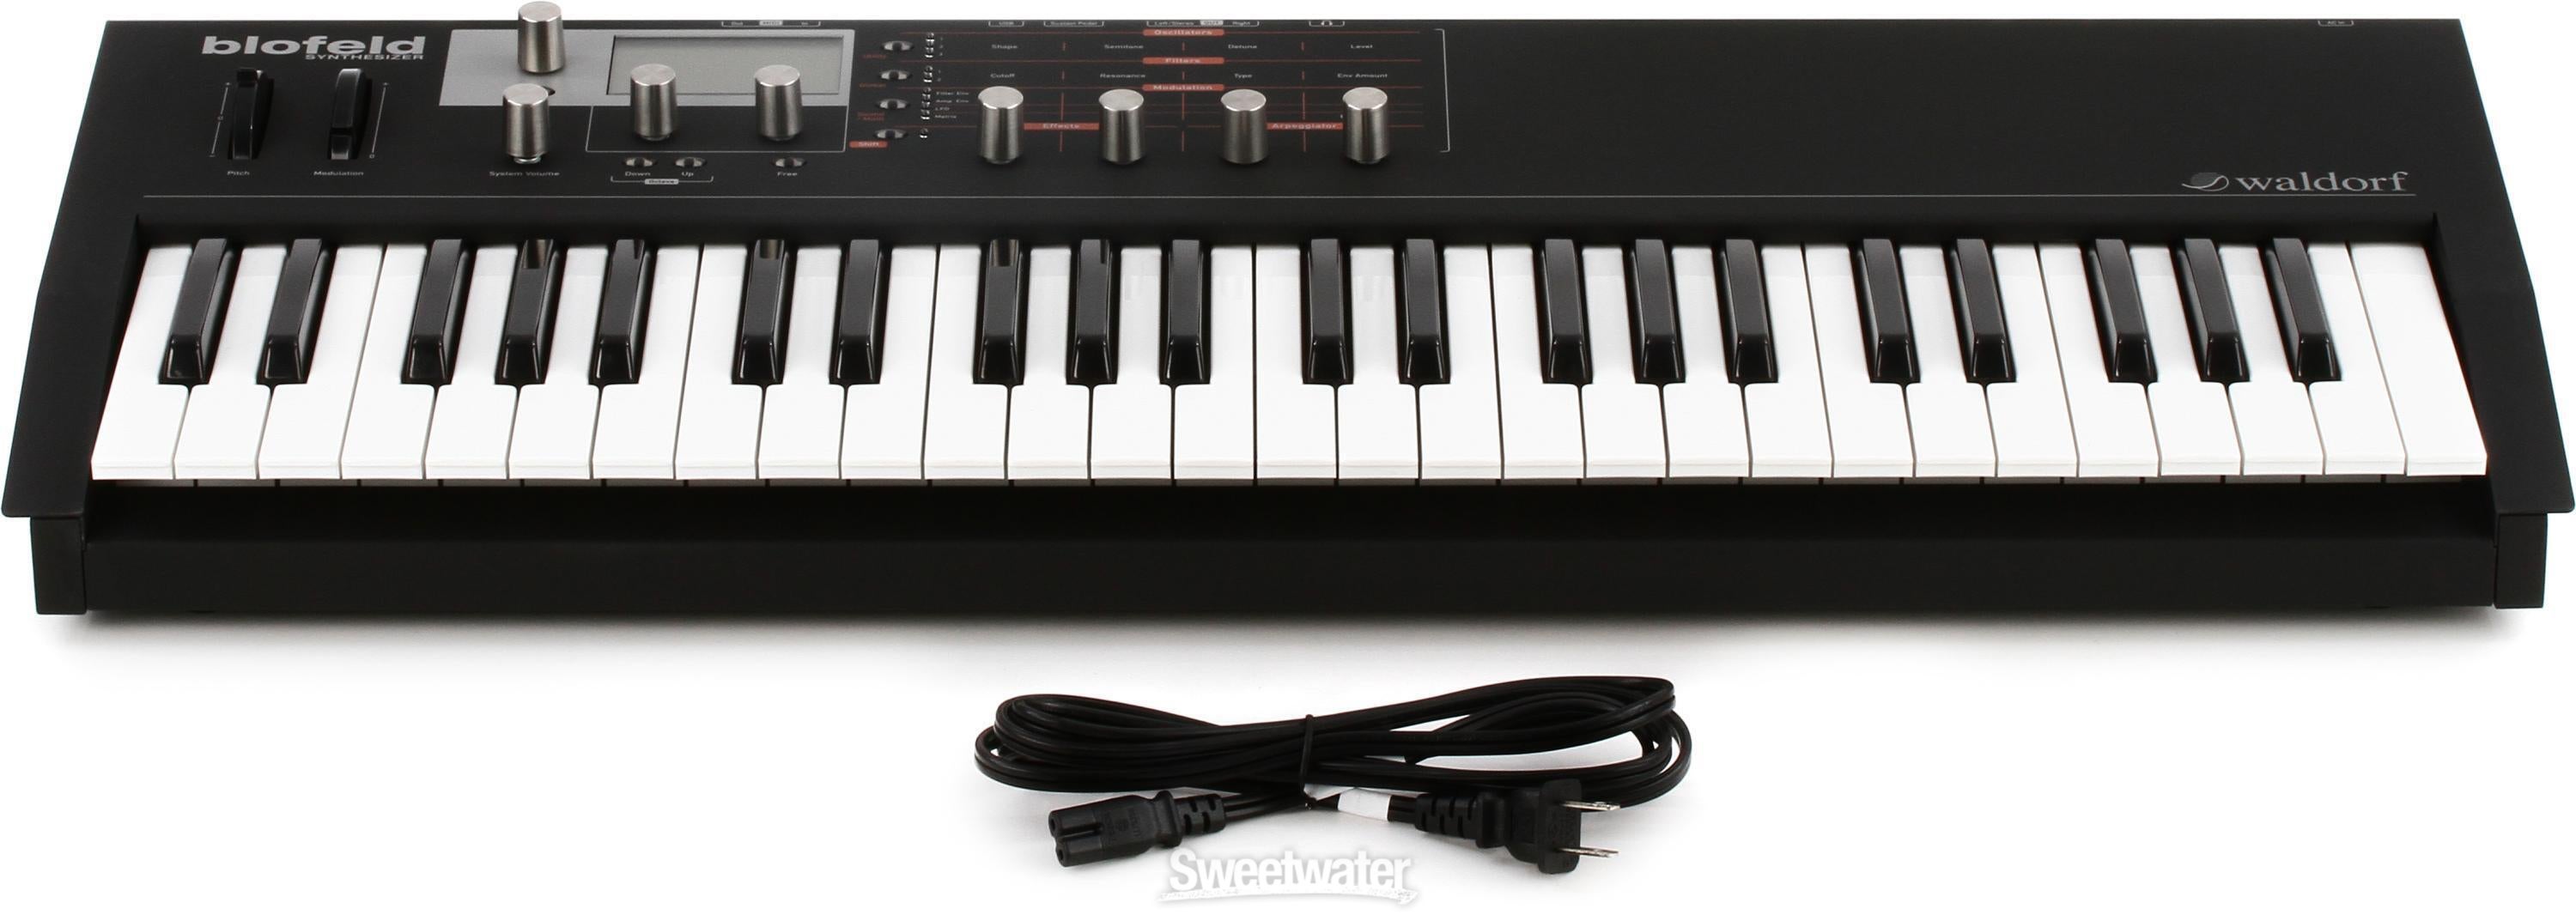 Waldorf Blofeld Keyboard Synthesizer Black Sweetwater